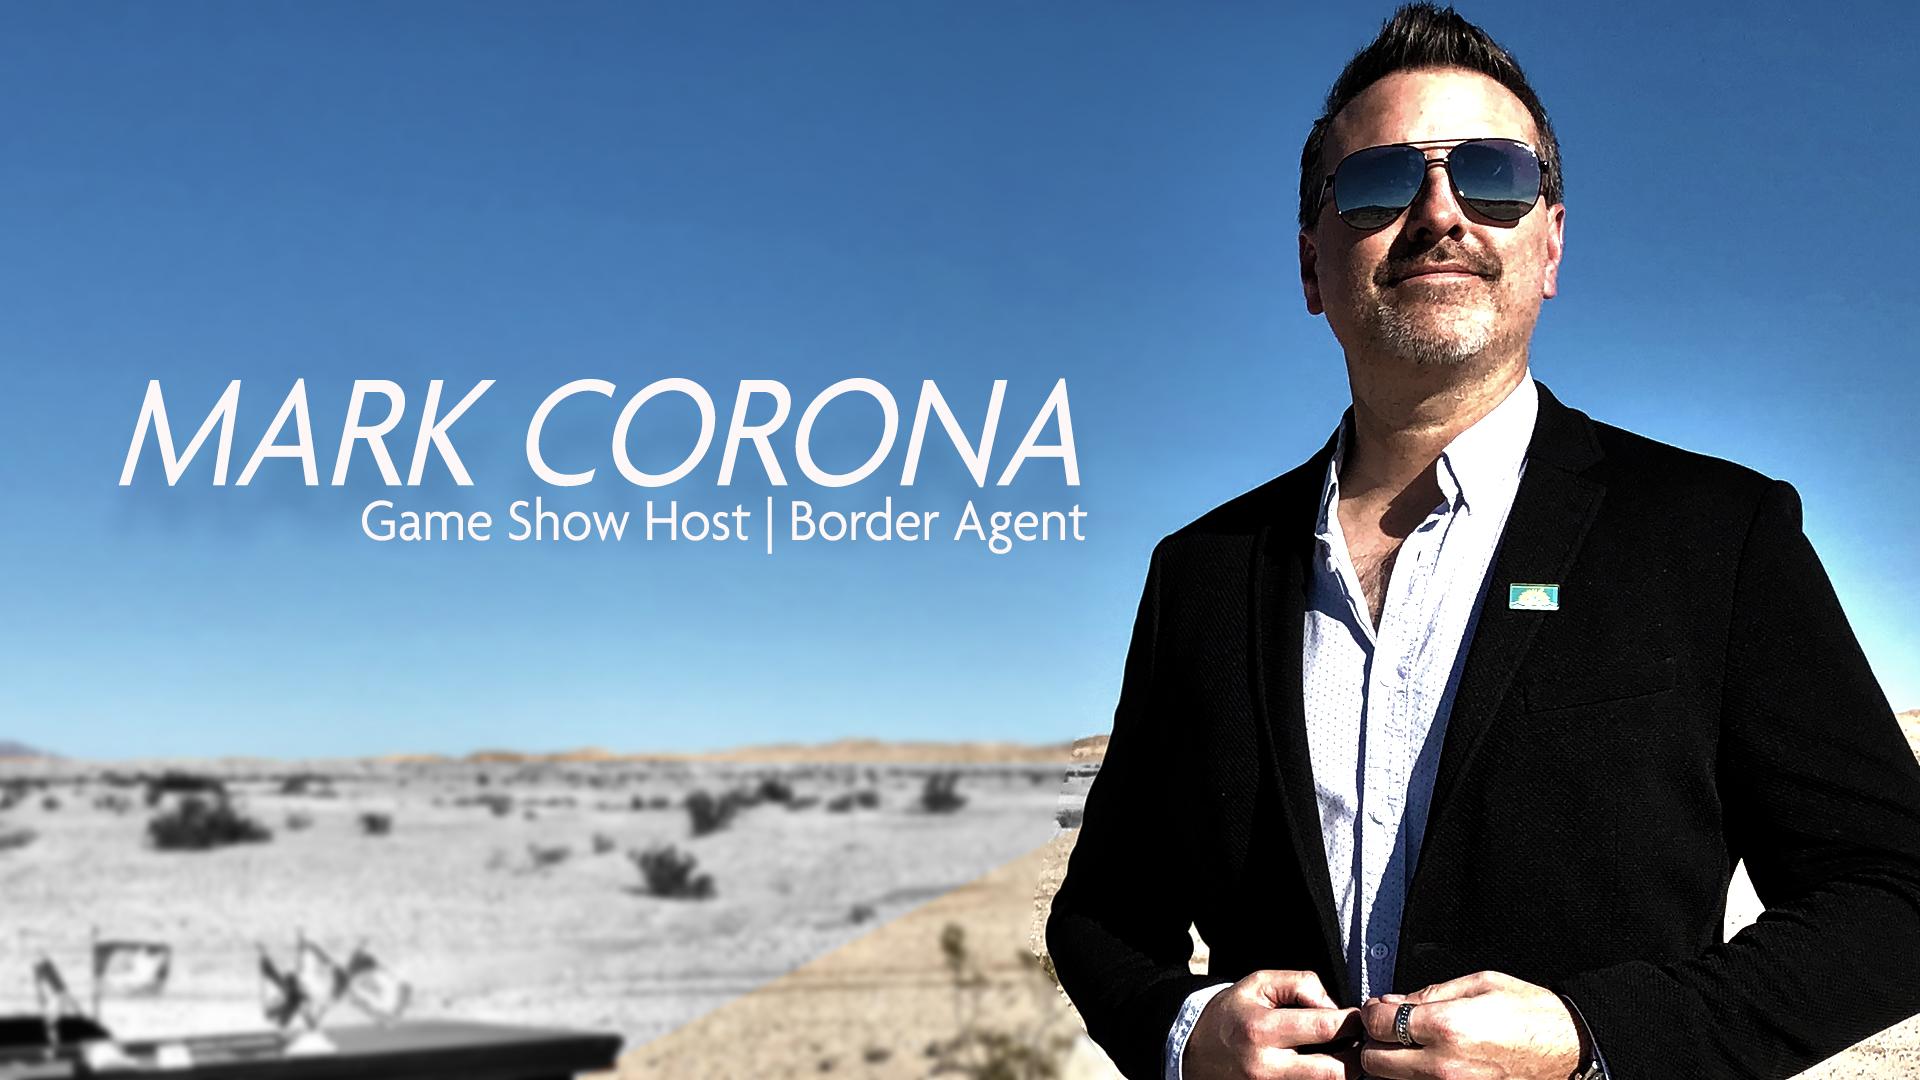 Mark Corona, Game Show Host And Border Agent